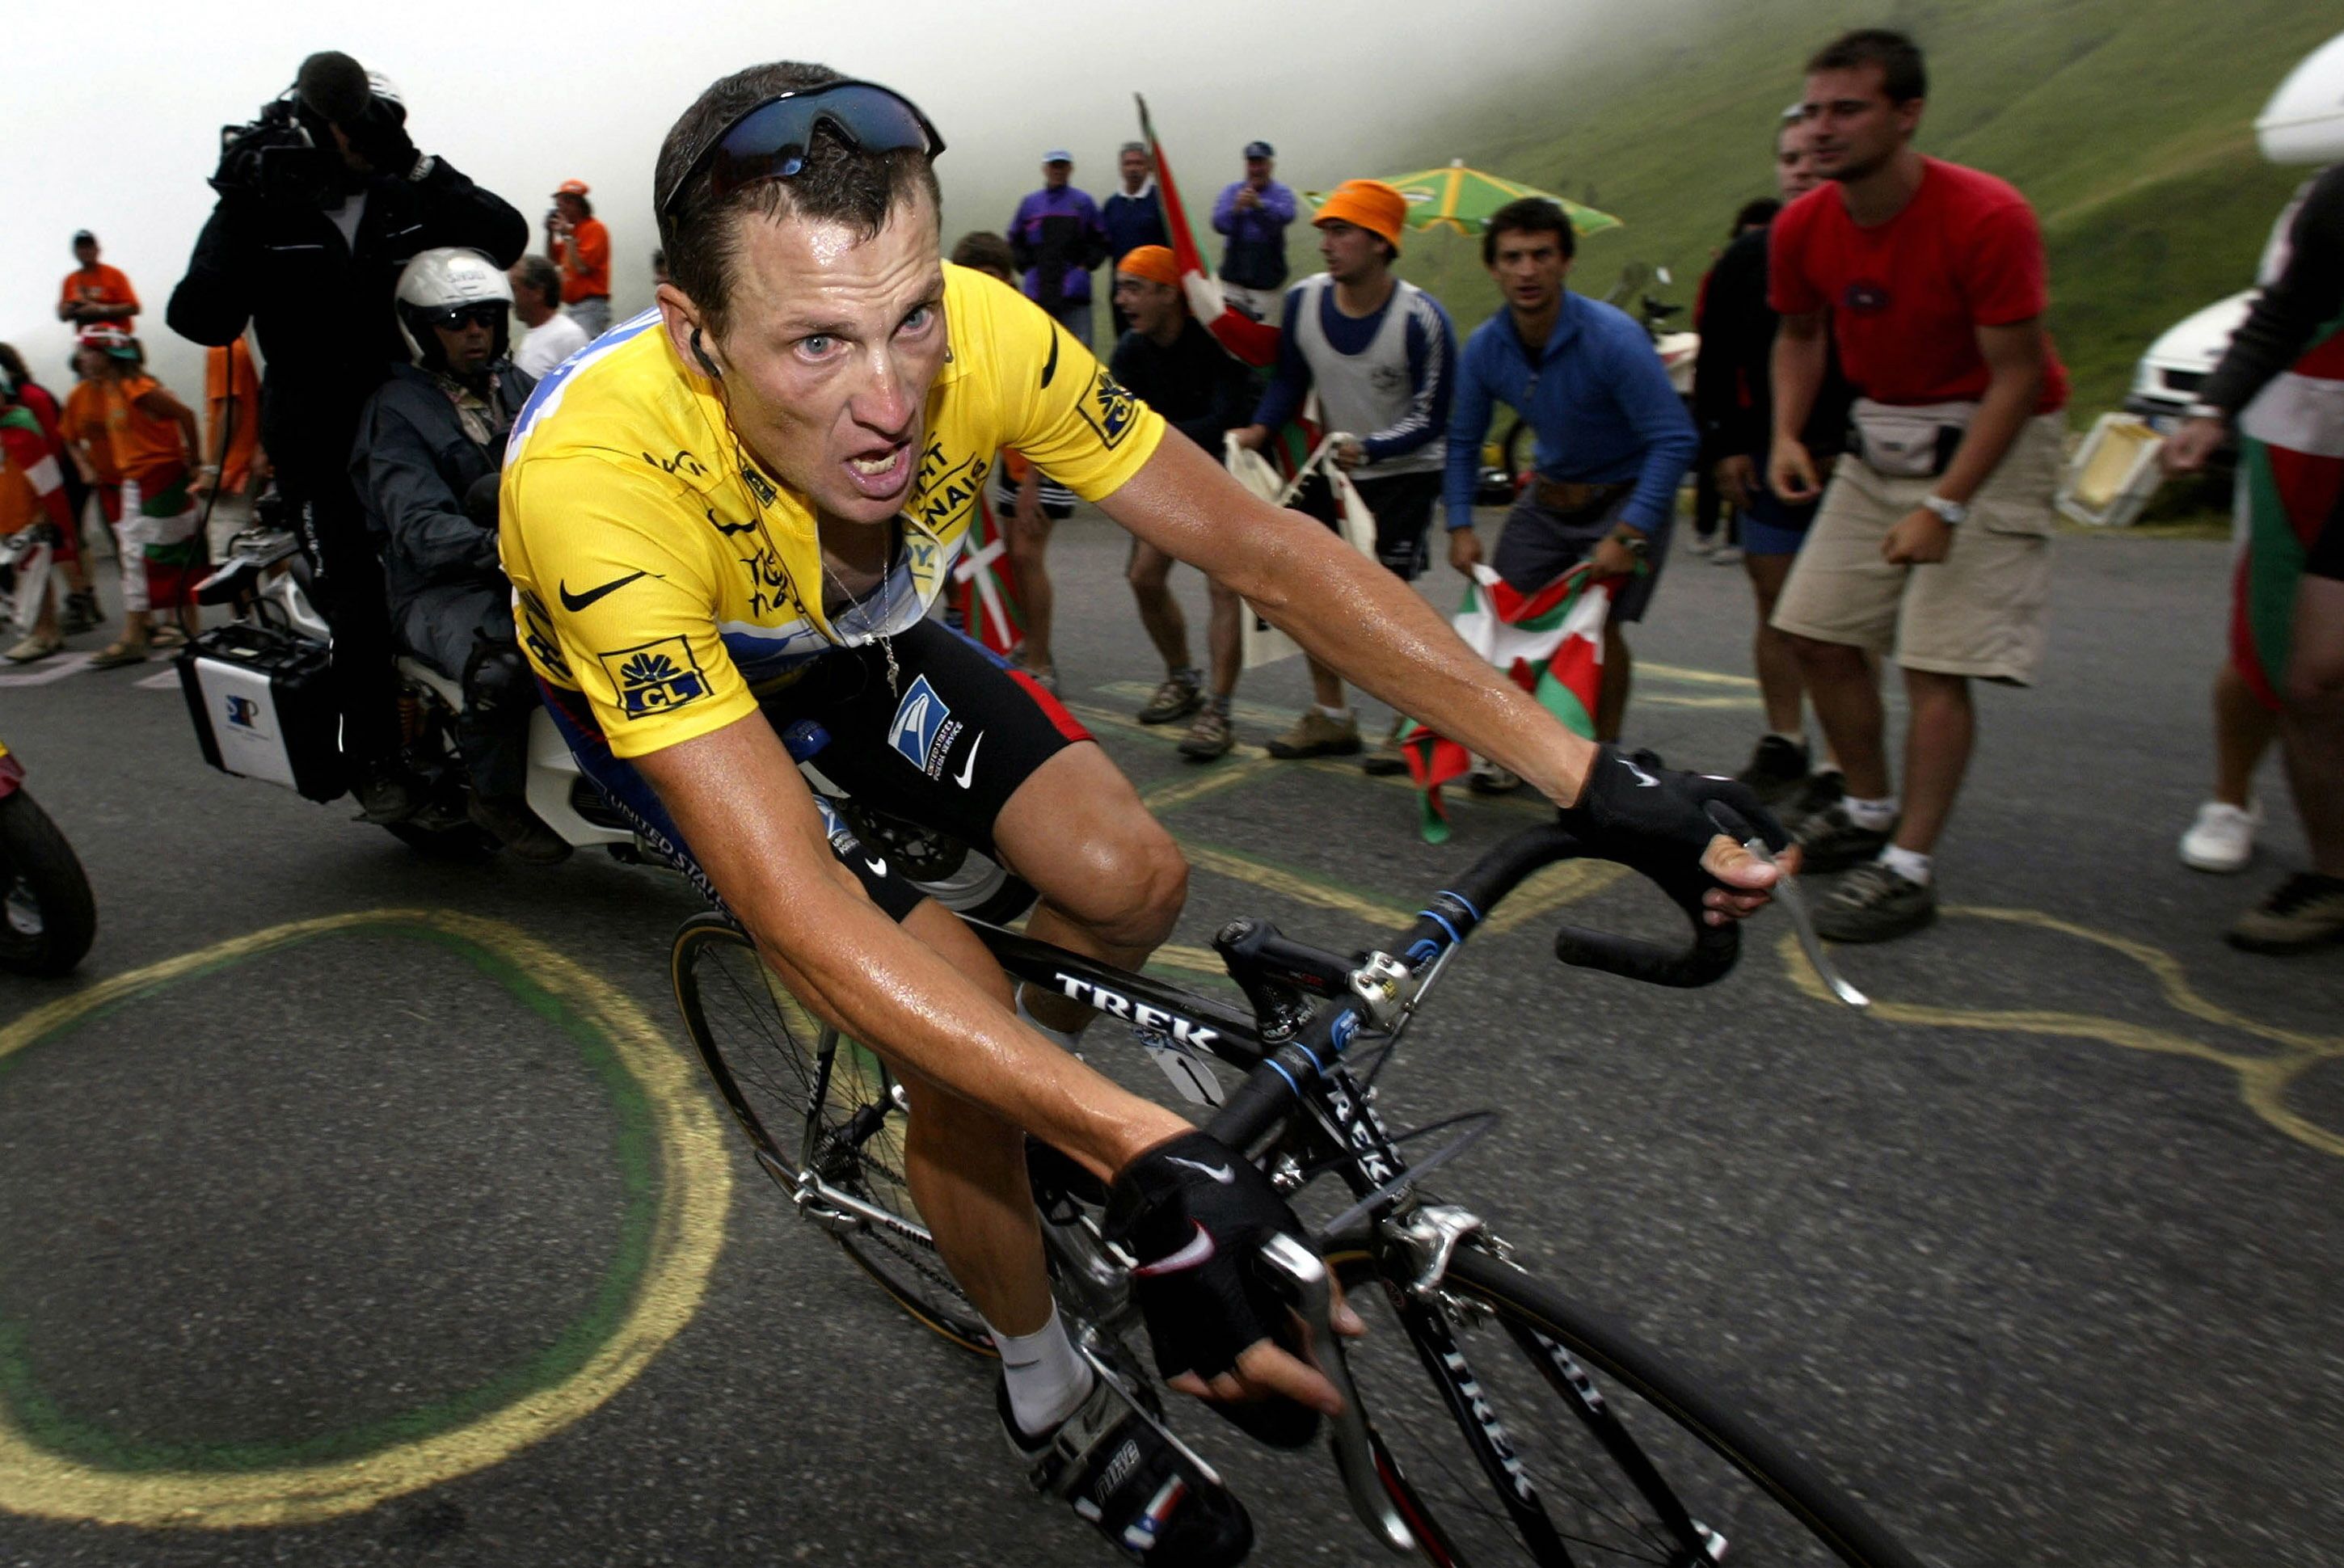 Lance Armstrong's inspiring Story, A Cancer Survivor And Fighter SeeKen